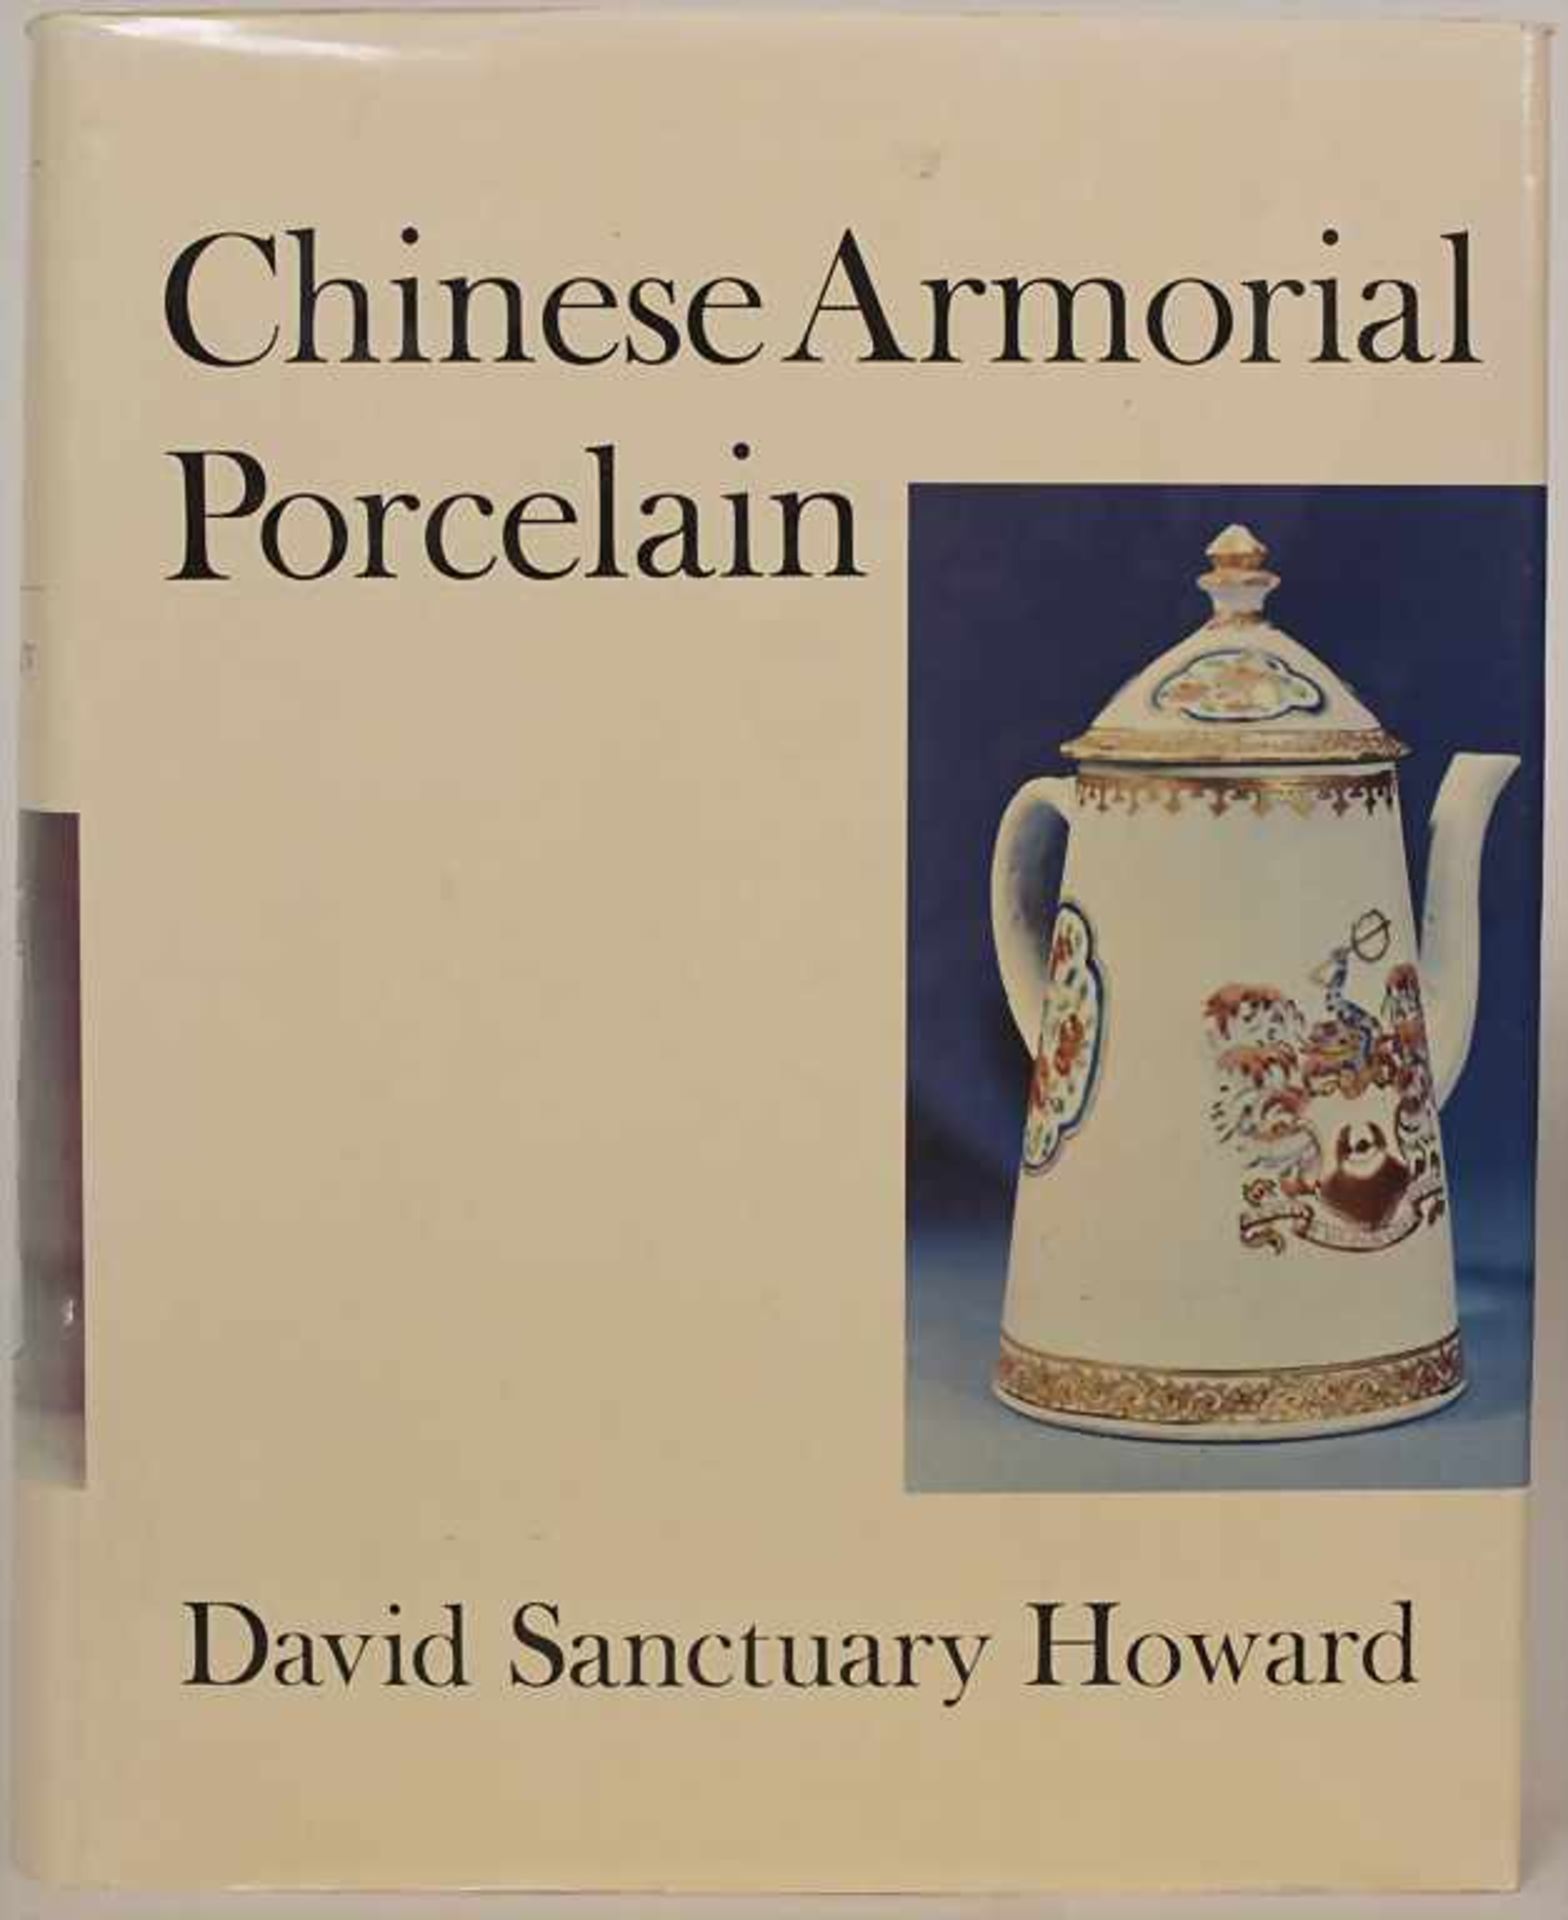 Howard, David Sanctuary: Chinese armorial porcelain.Titel: Chinese armorial porcelain.Umfang: 1034